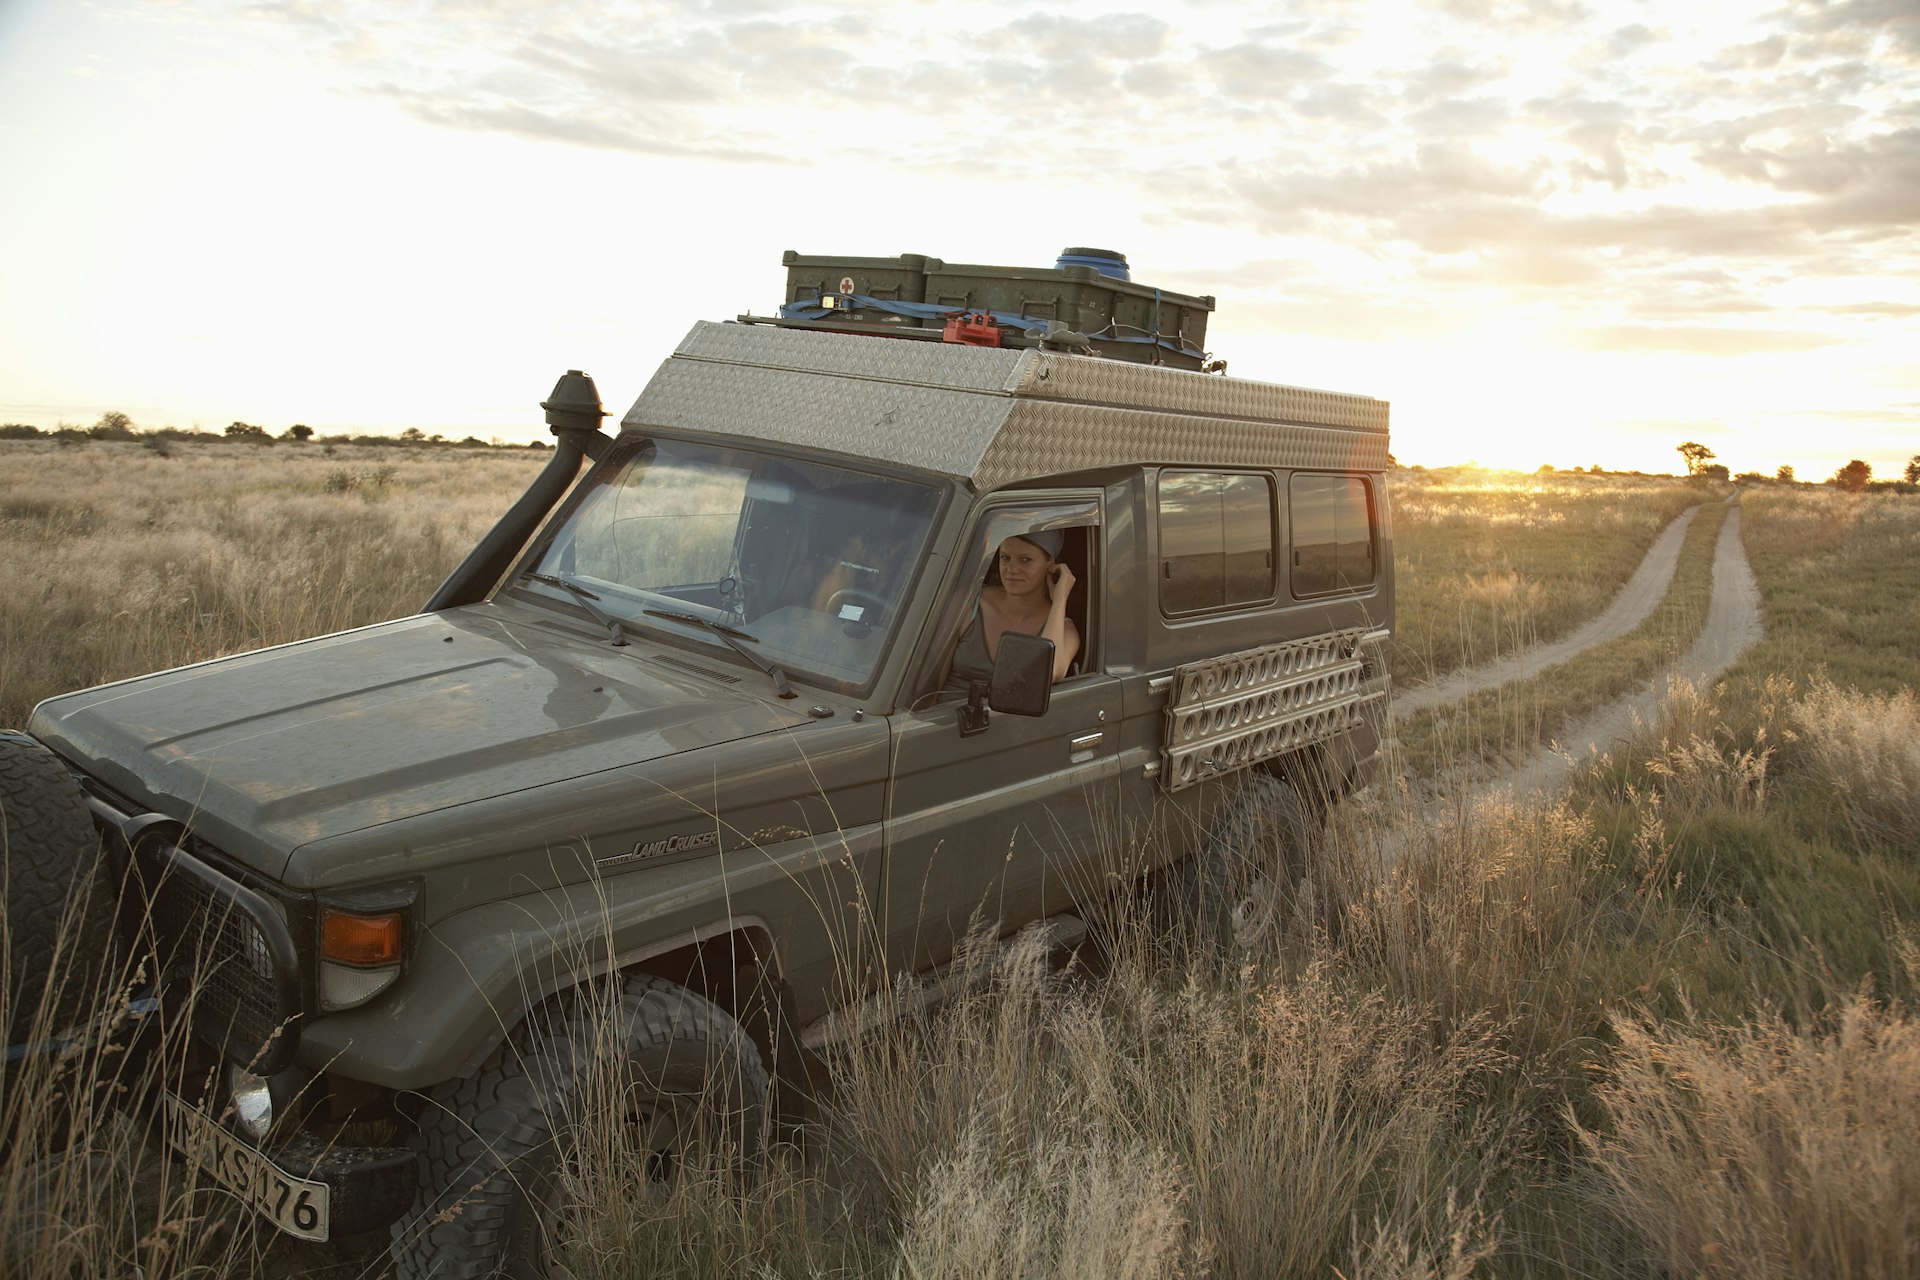 A Land Cruiser cuts through the Bush in Botswana, following a dirt track with a women sat inside